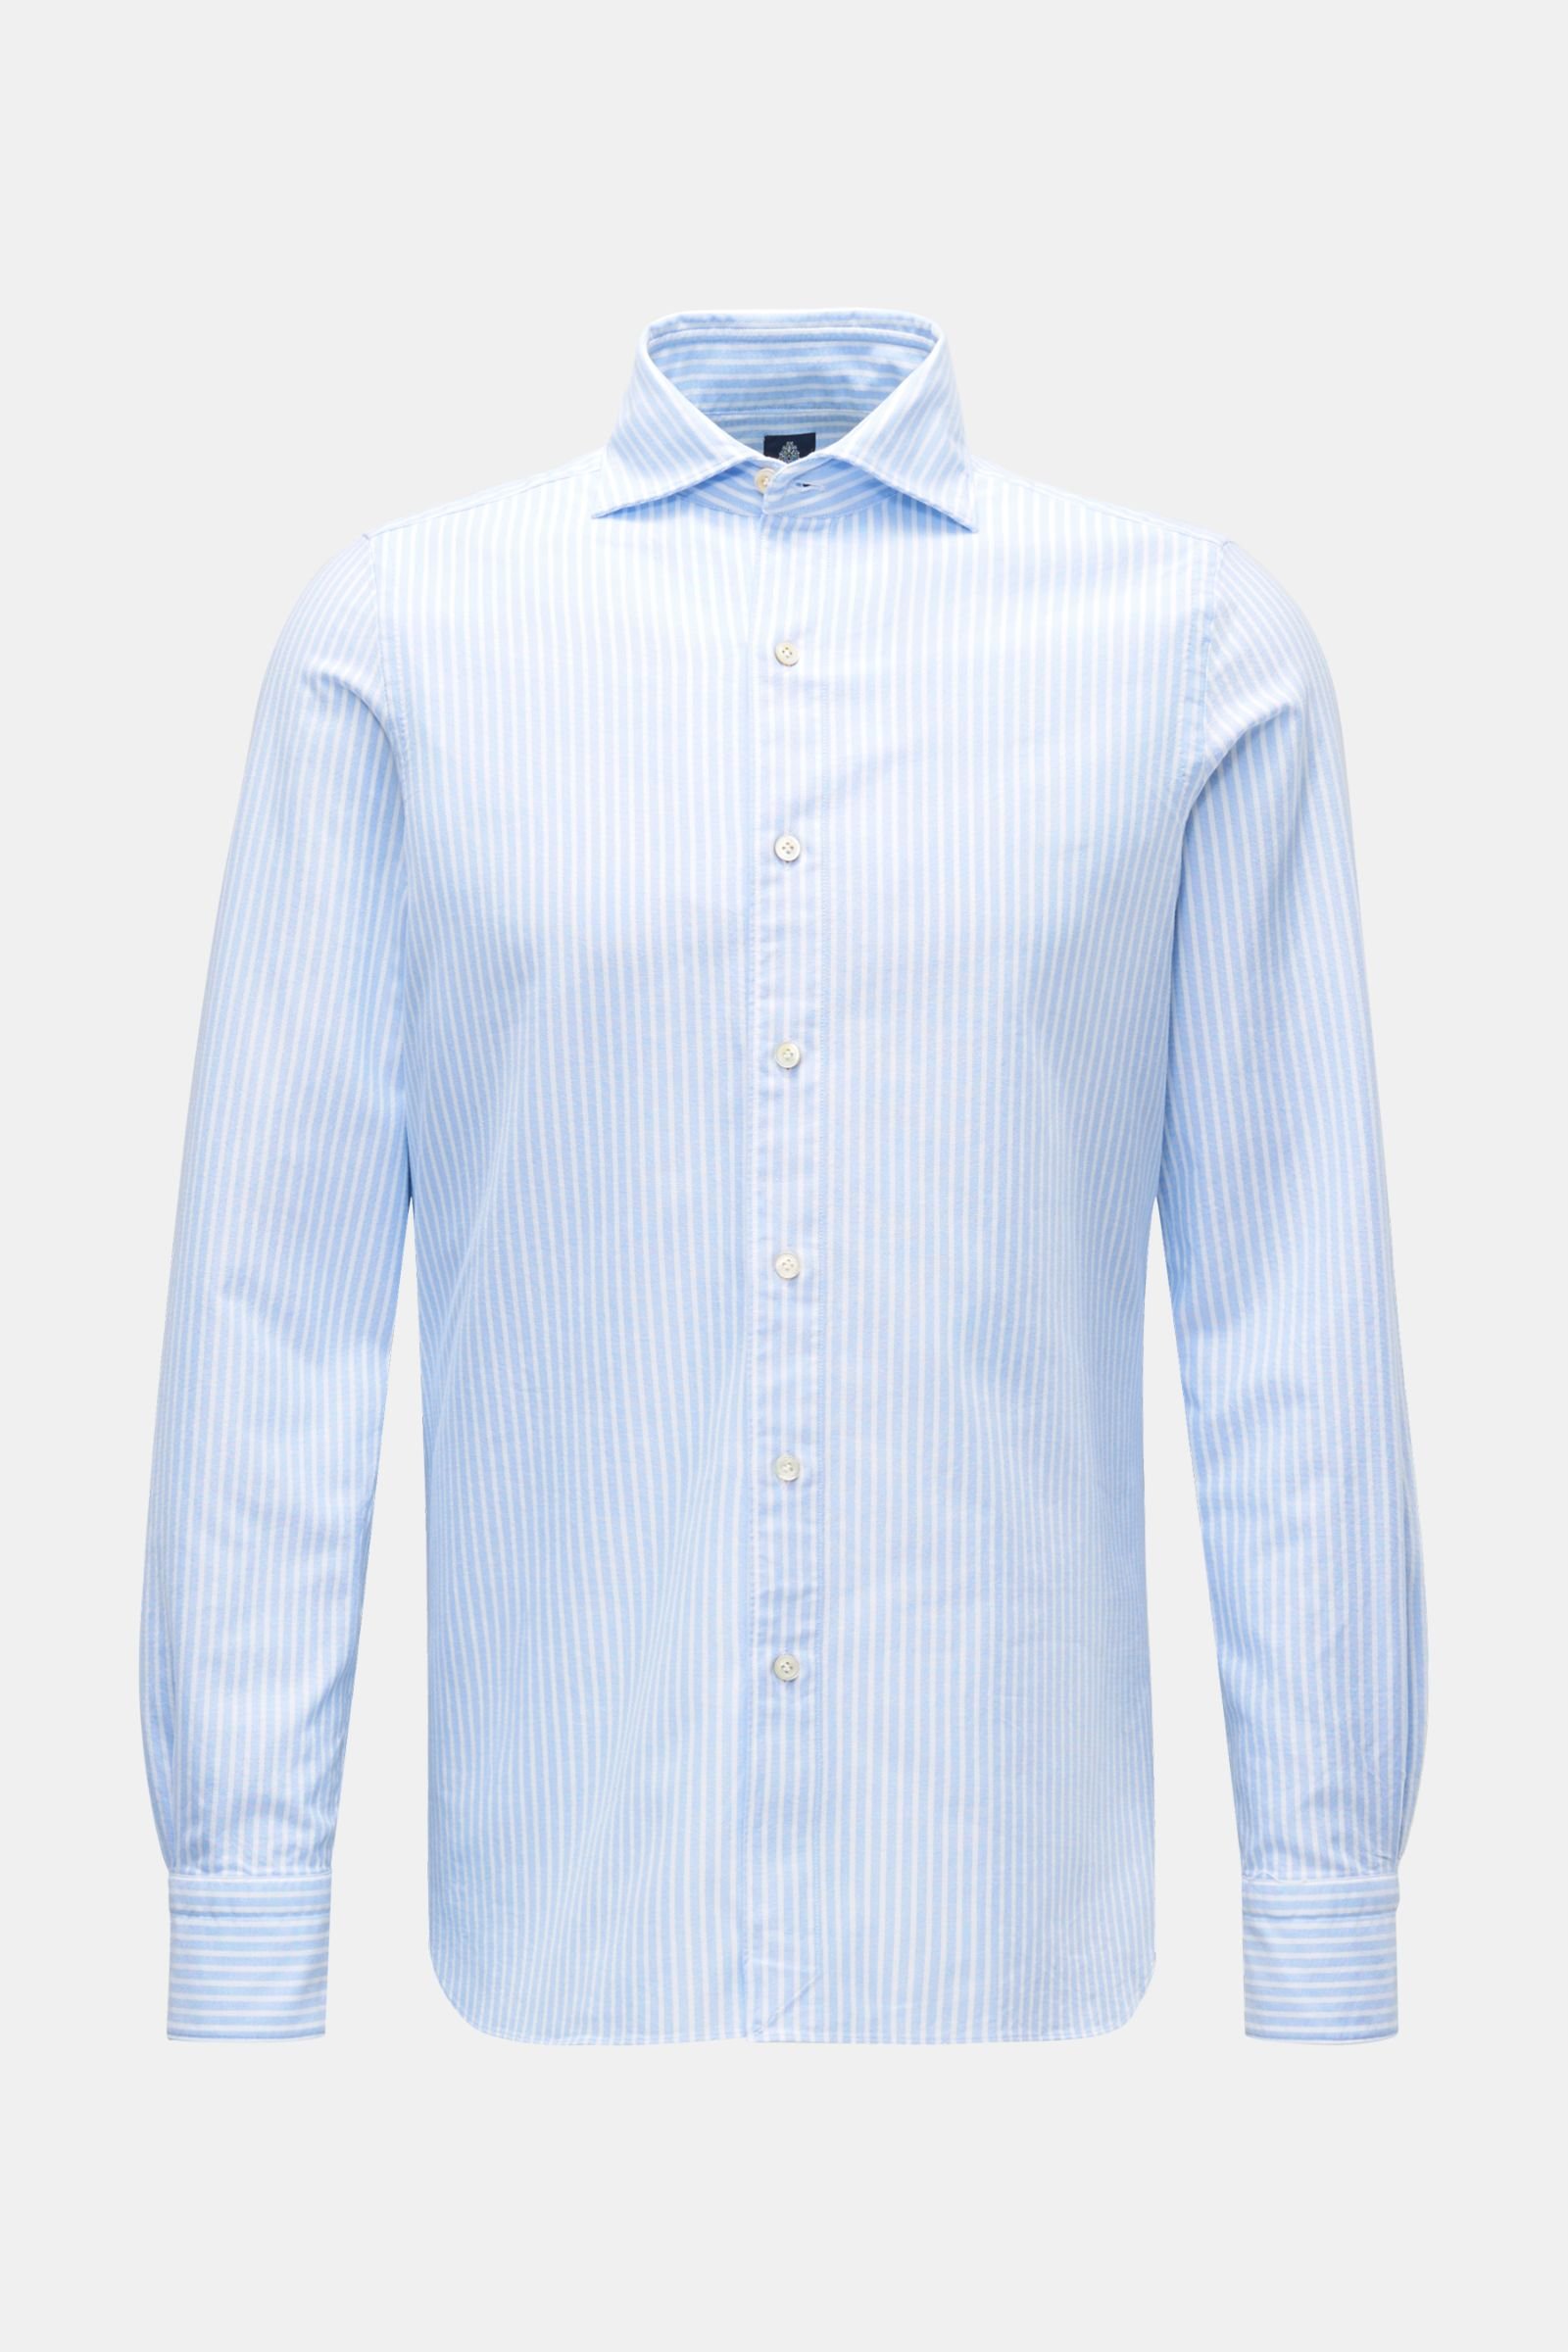 Oxford shirt 'Edoardo Gaeta' shark collar light blue/white striped